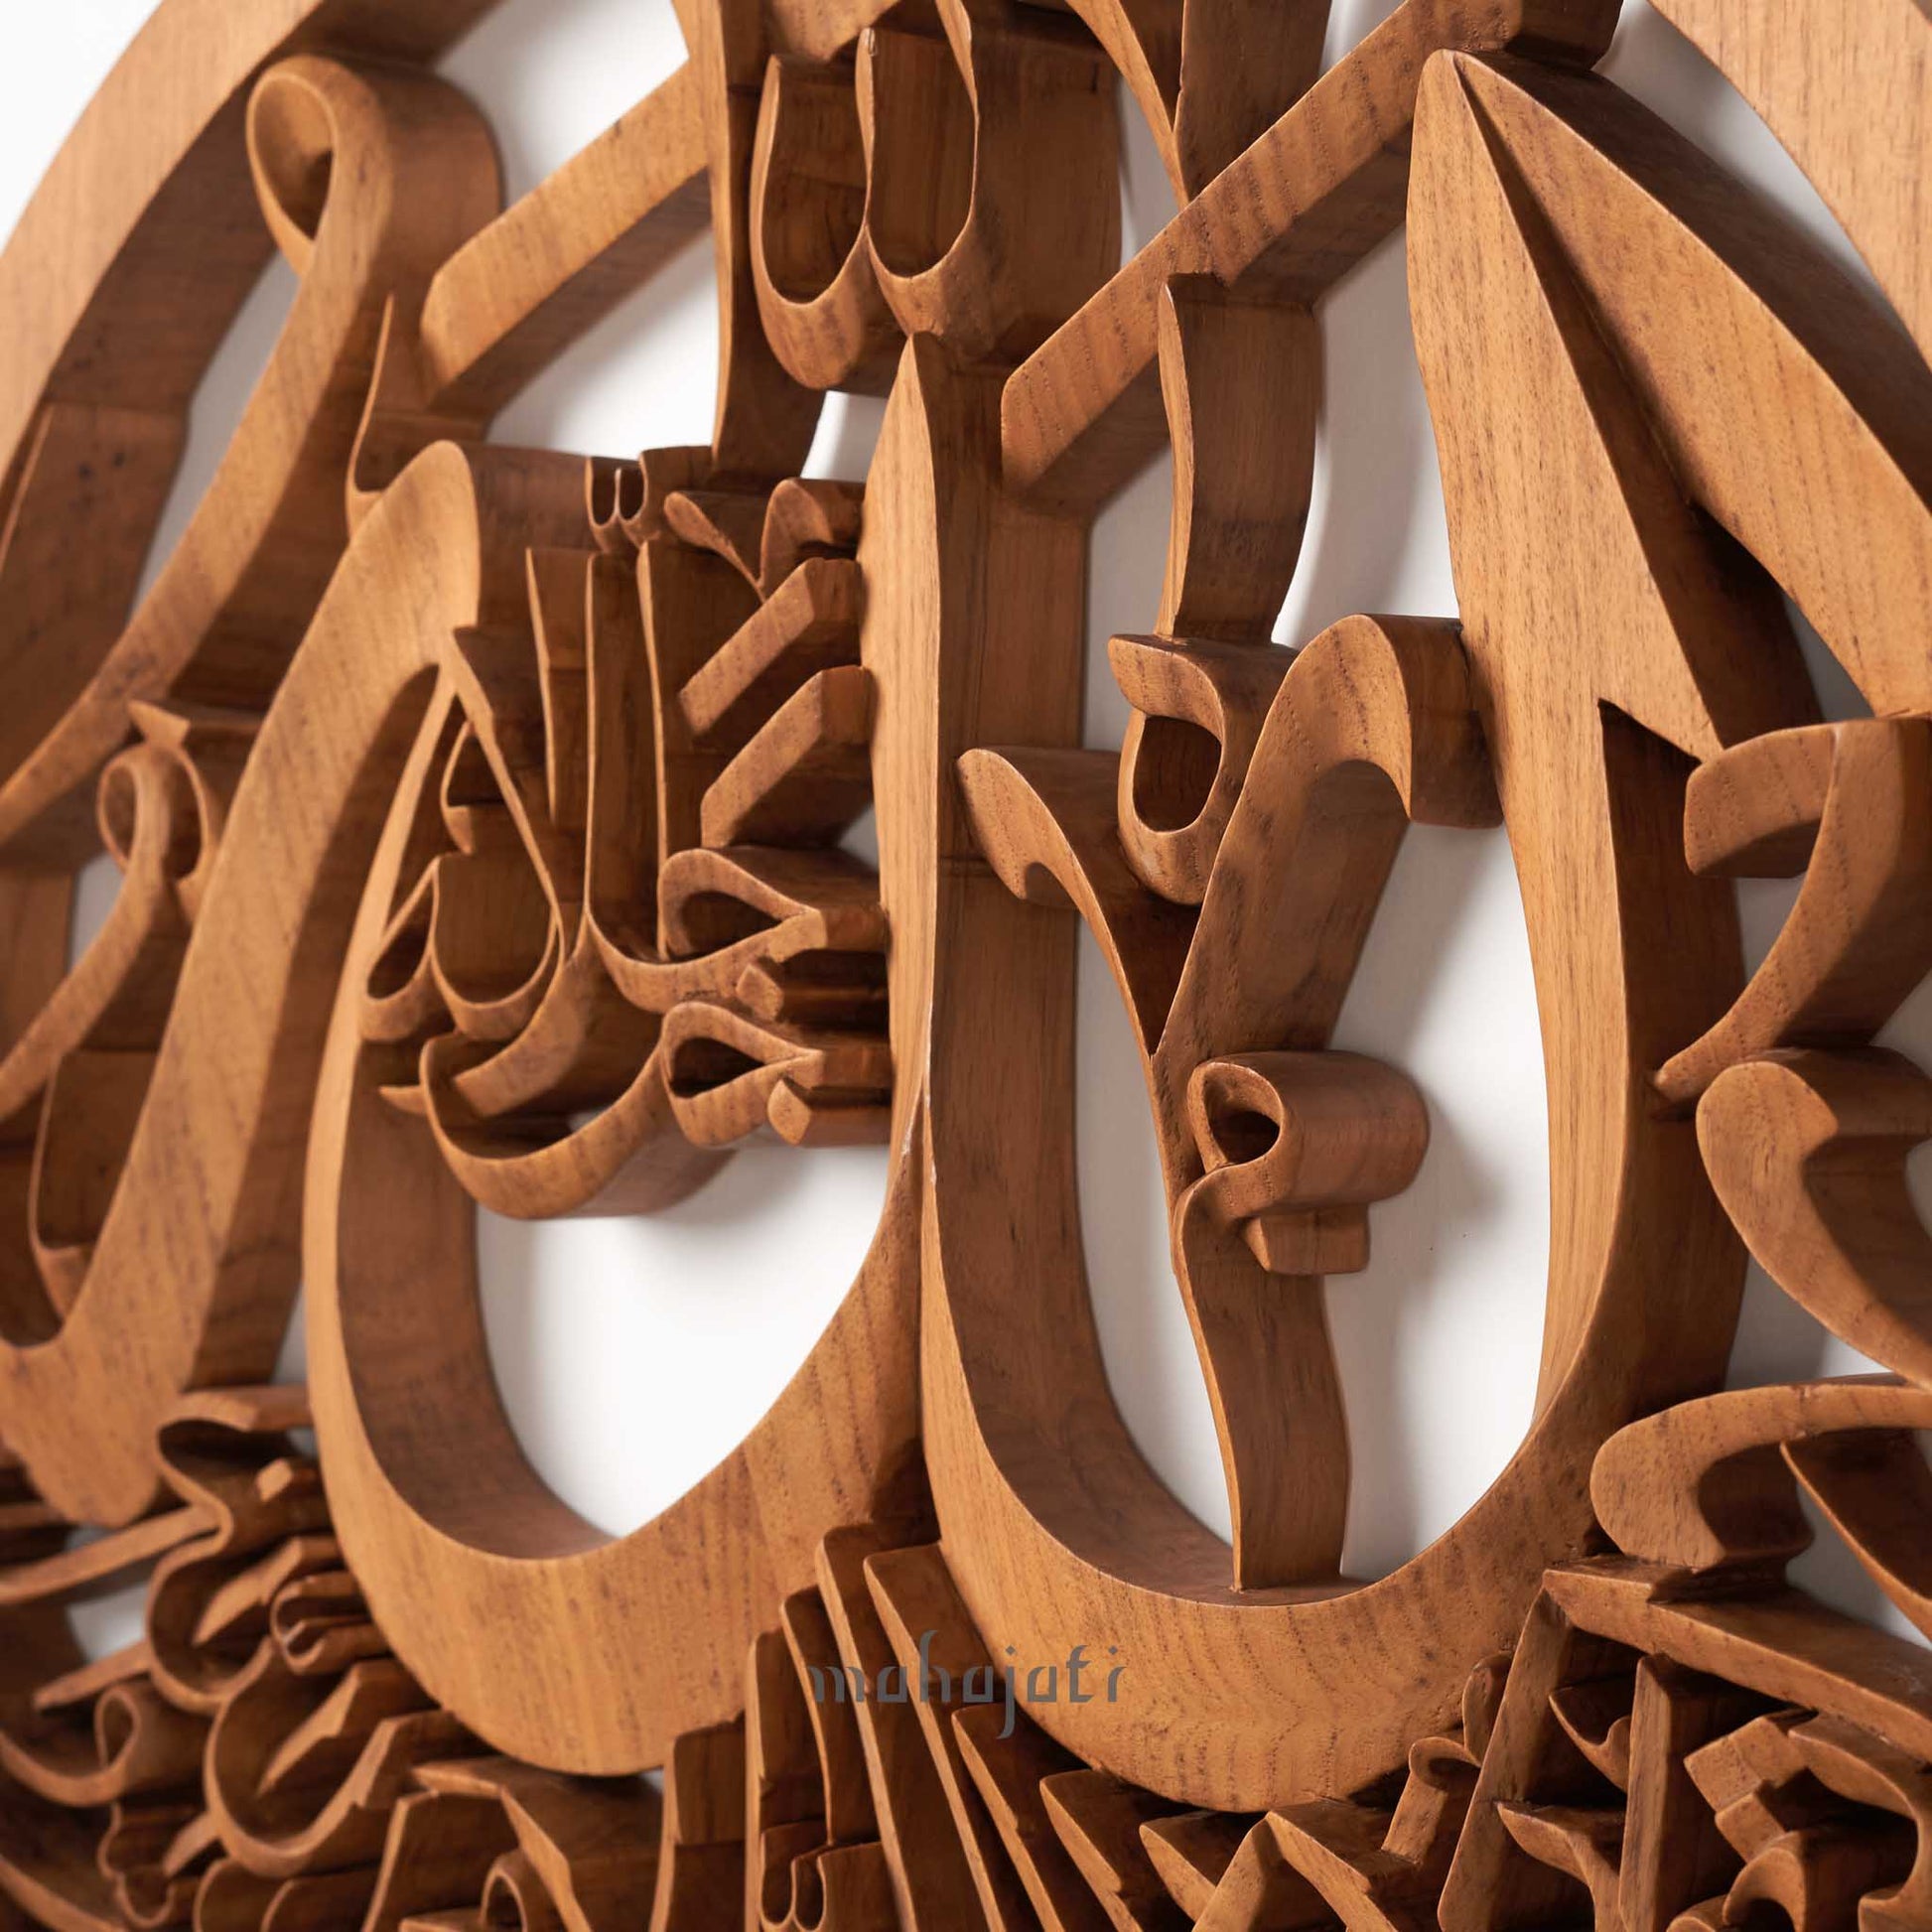 Allah SWT / Shahada Islamic Art Gifts